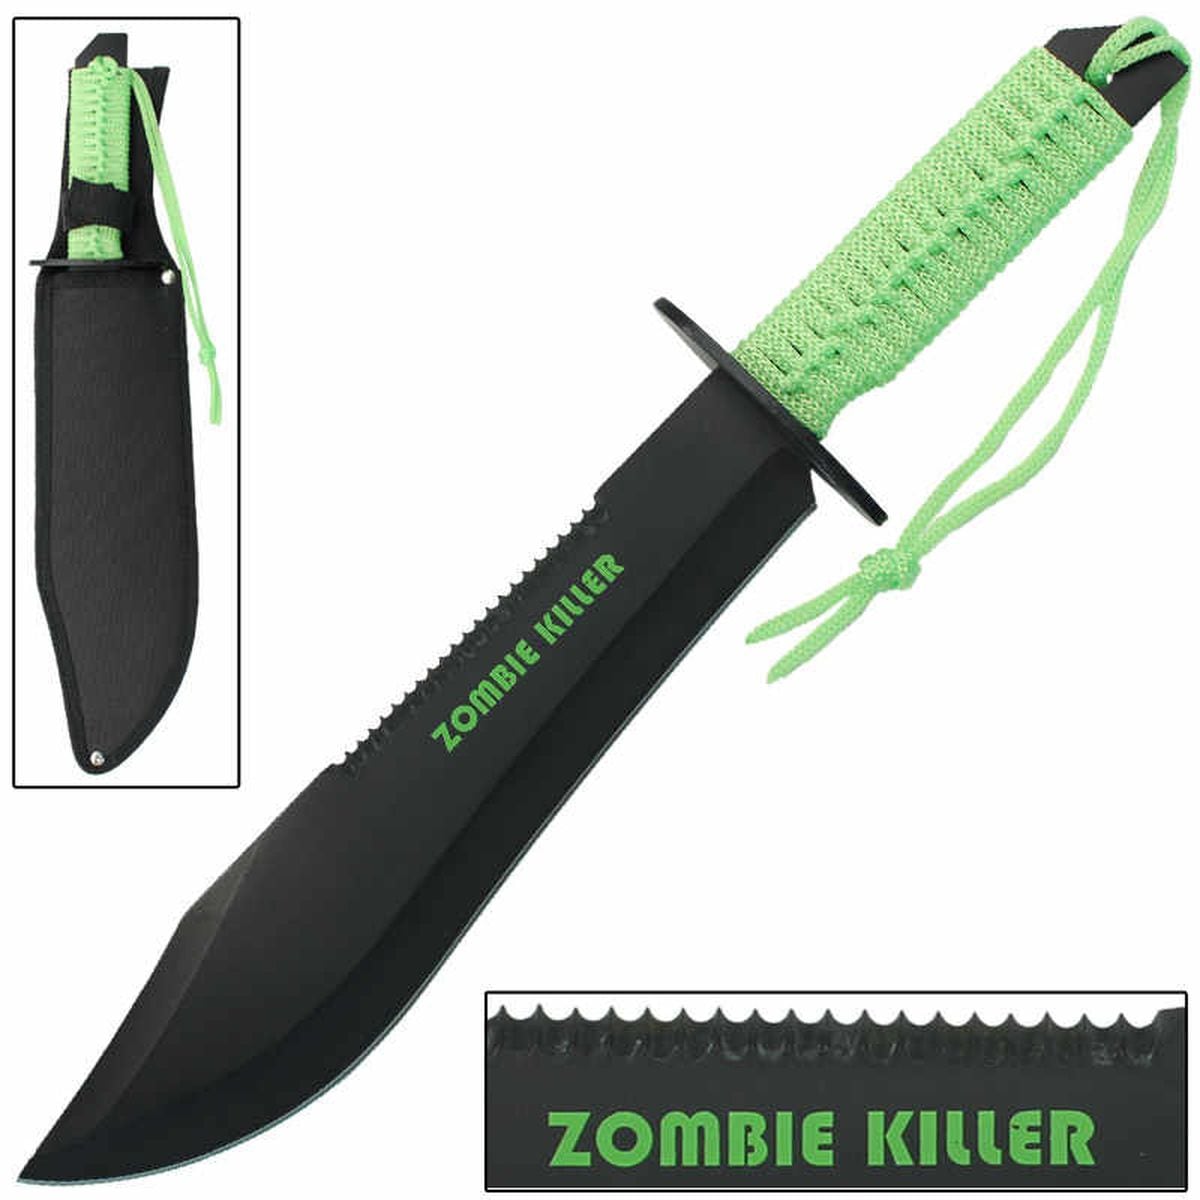 Нож Боуи зеленый. Zombie Killer Knife. Нож зомби киллер. Нож военный зеленый. Killer нож